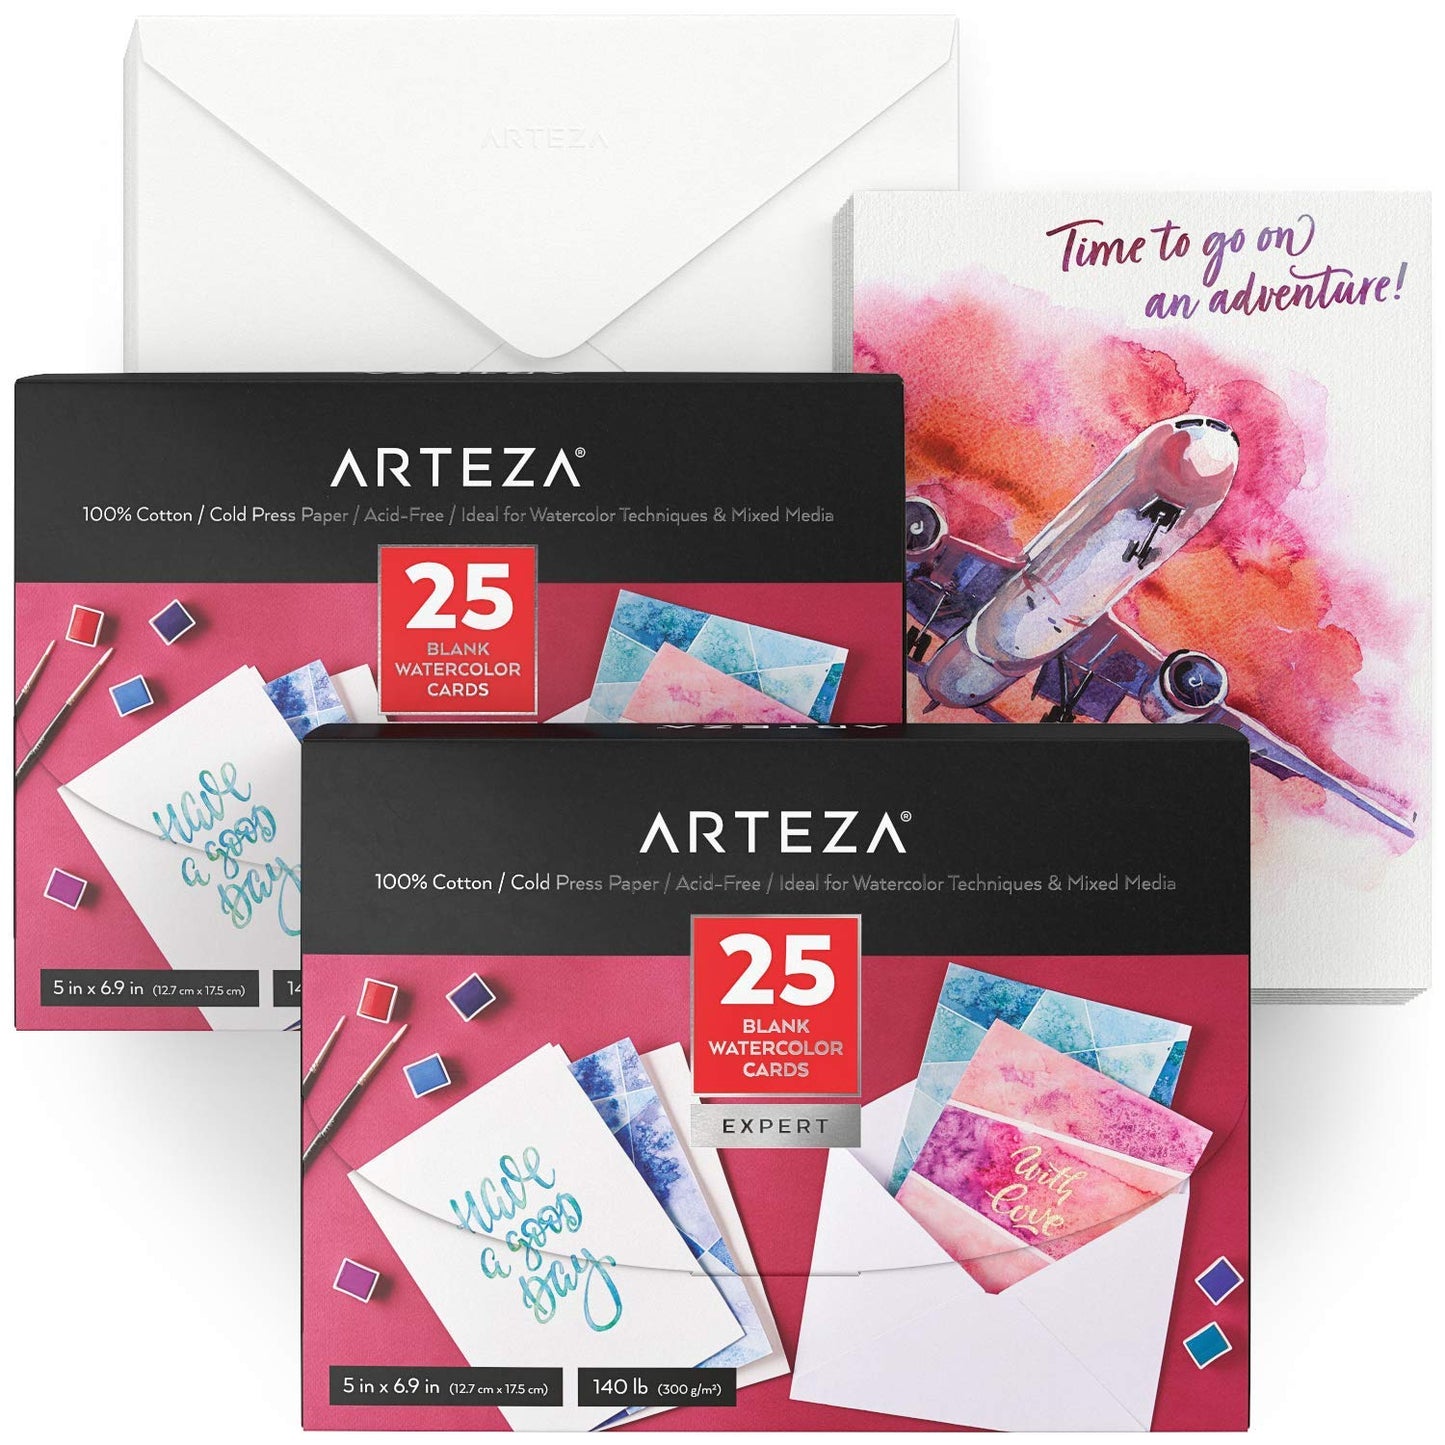 Arteza Expert Watercolor Cards & Envelopes, 100% Cotton, 5" x 7", 25 Sheets - Pack of 2